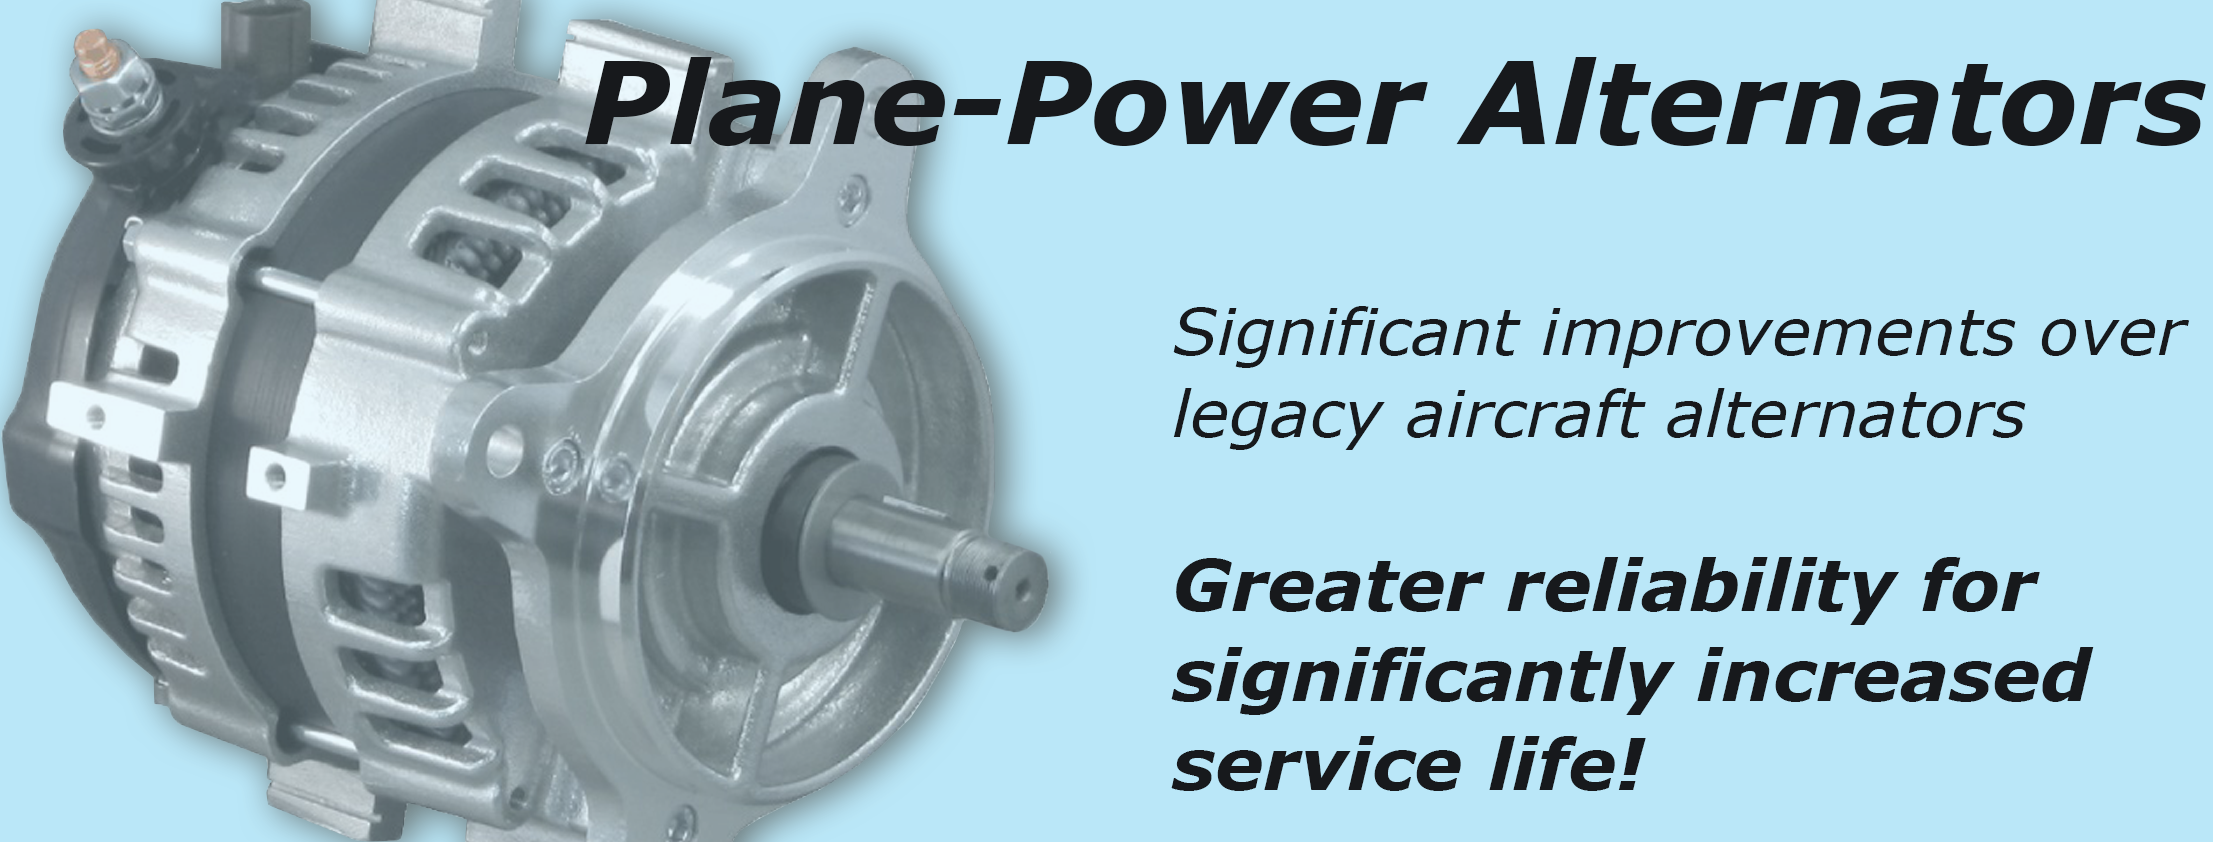 Plane-Power Alternators